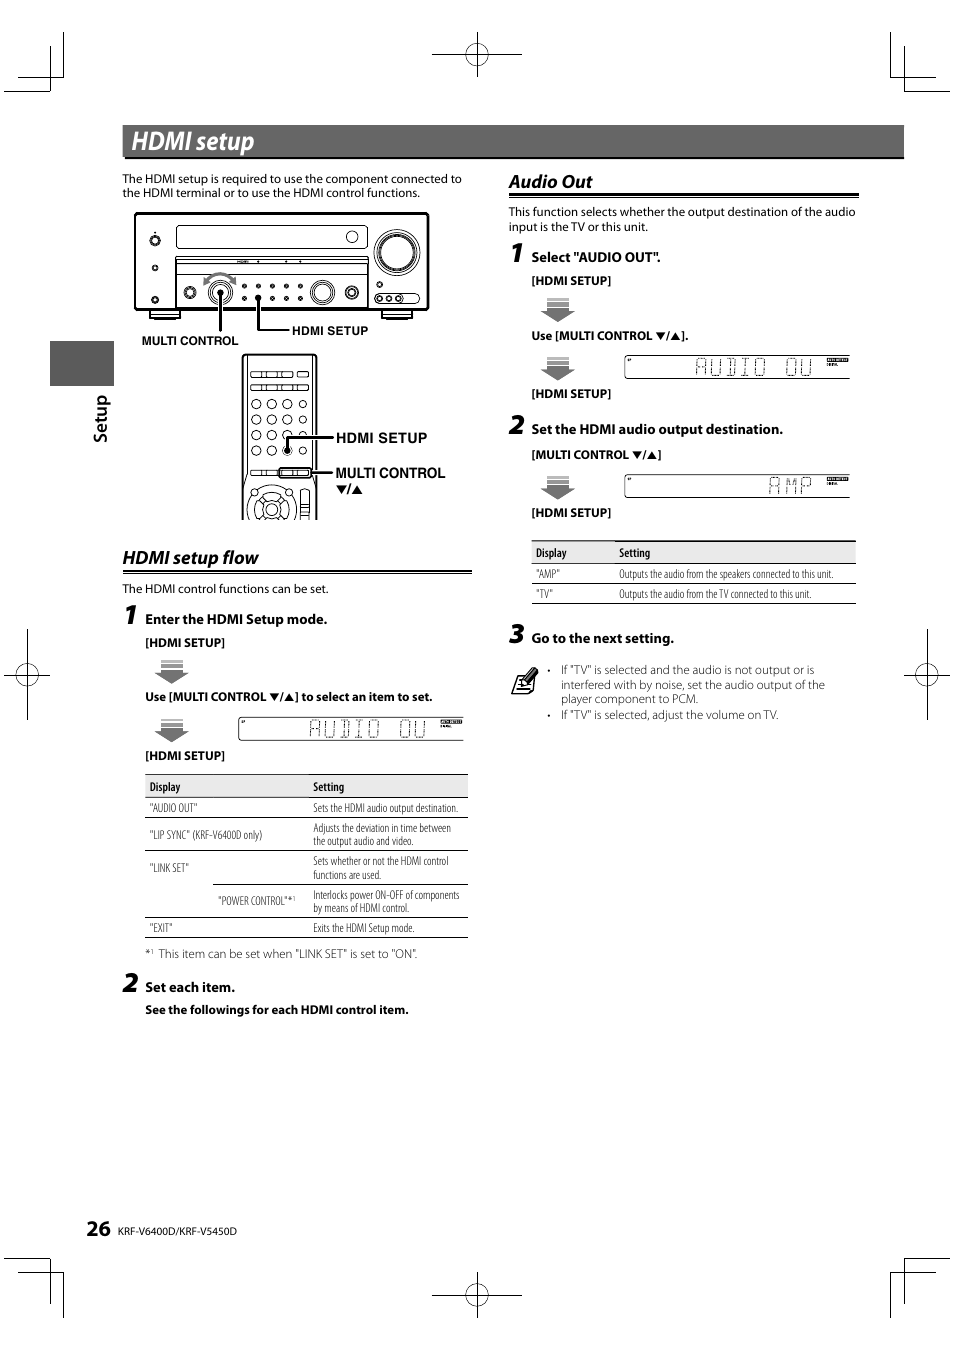 Hdmi setup, Set u p, Hdmi setup flow | Kenwood KRF-V5450D User Manual |  Page 26 / 48 | Original mode